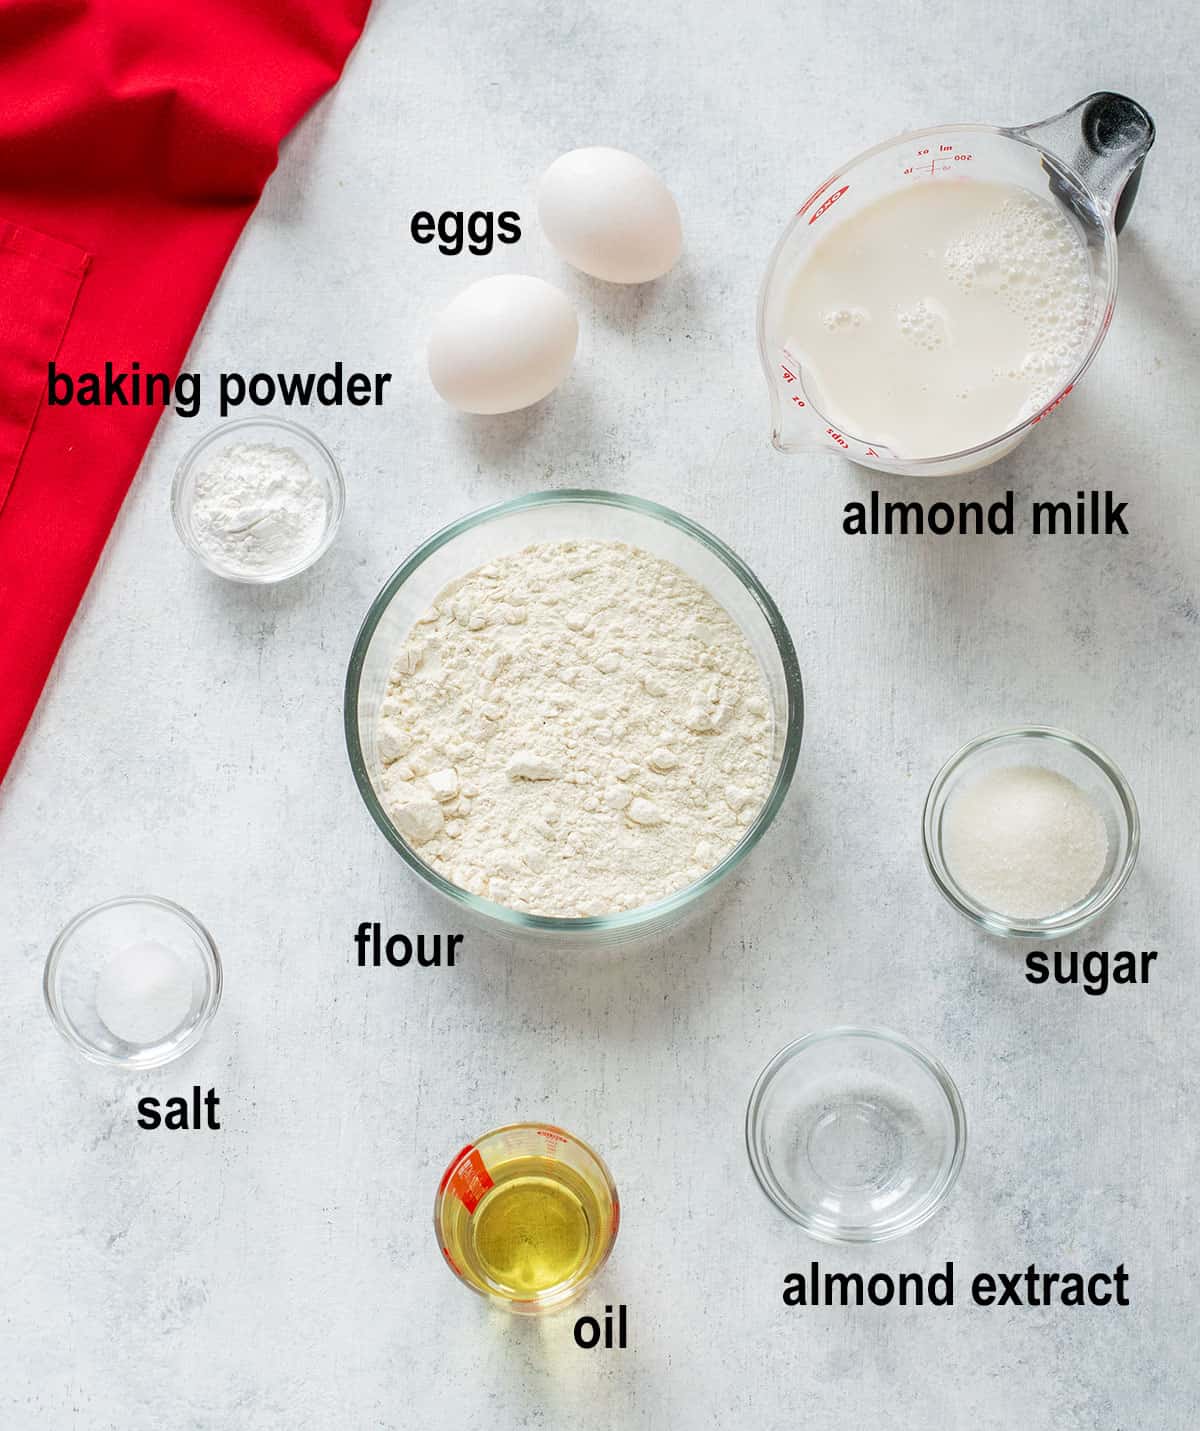 baking powder, eggs, almond milk, salt, flour, sugar, oil, almond extract